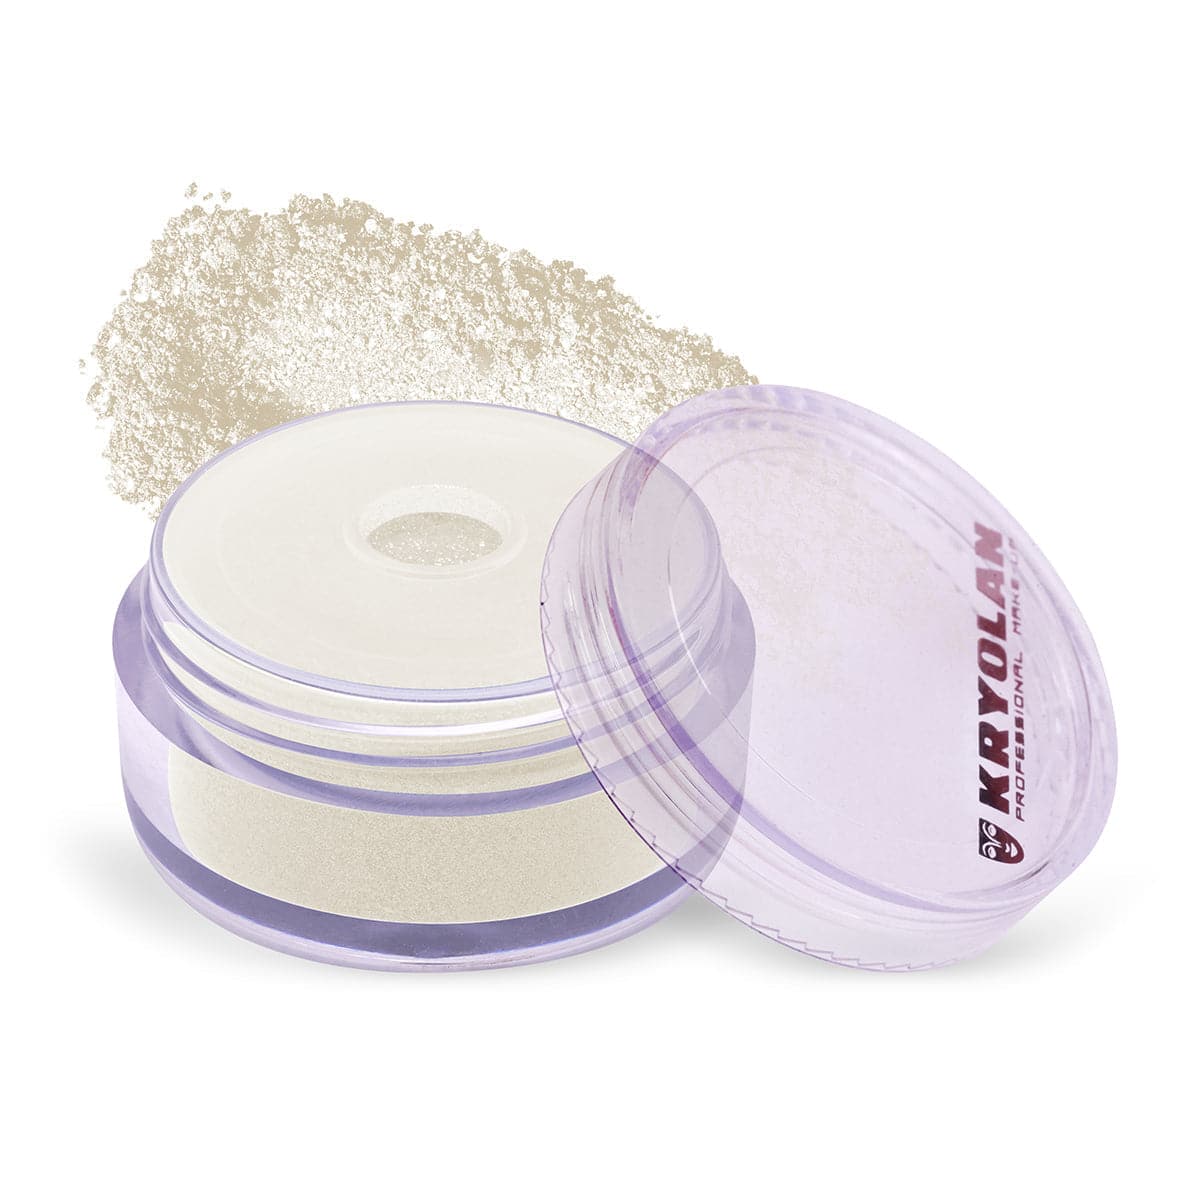 Kryolan Satin Powder - 113 White Silver - Premium Health & Beauty from Kryolan - Just Rs 2730.00! Shop now at Cozmetica